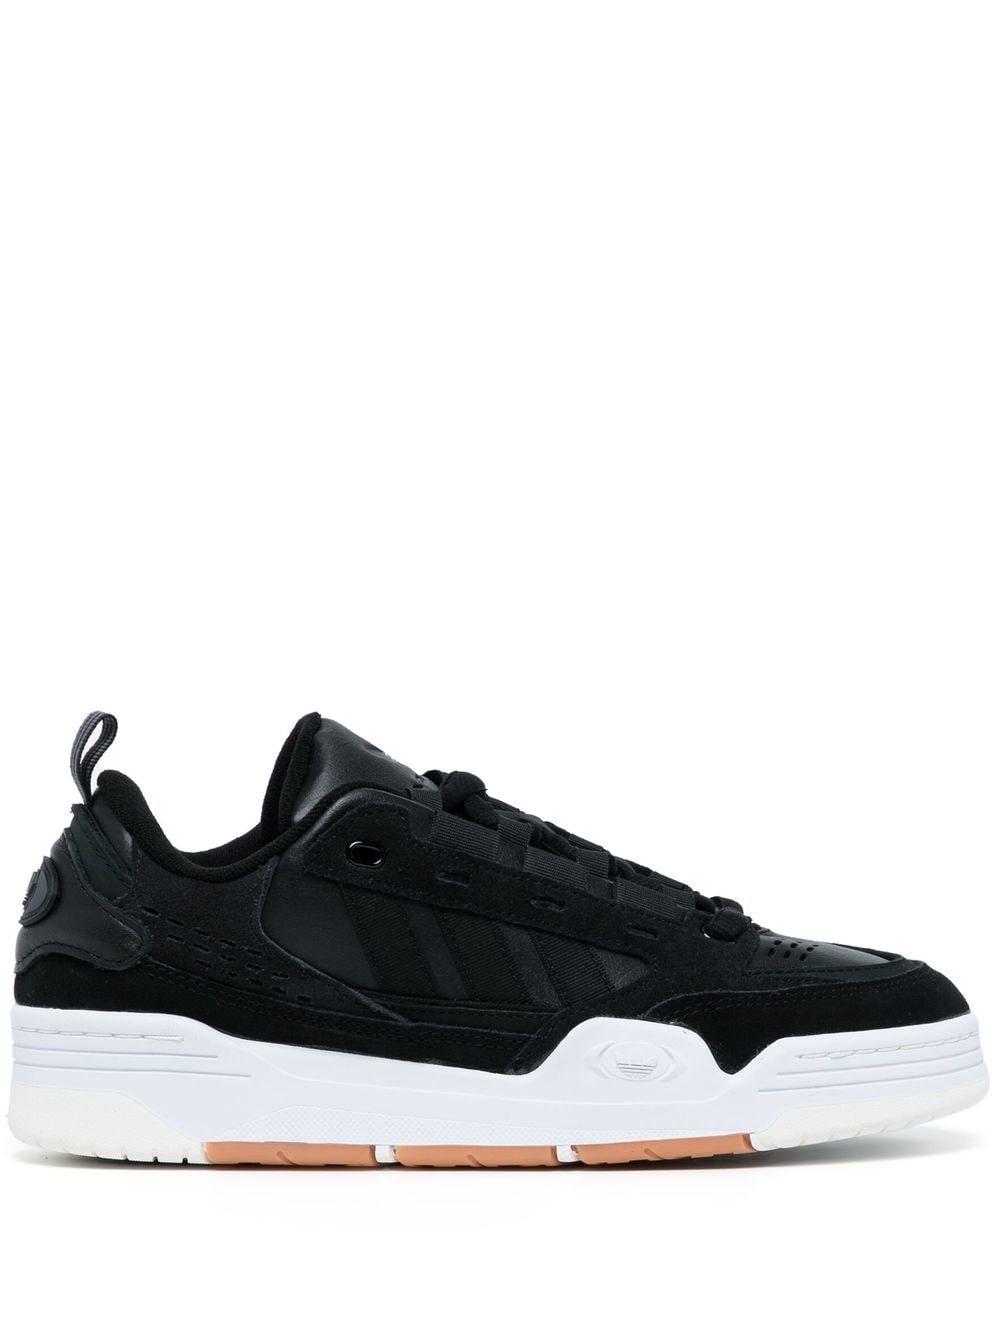 adidas Originals Adi 2000 Low-top Sneakers in White/Black (Black) for Men -  Save 35% | Lyst